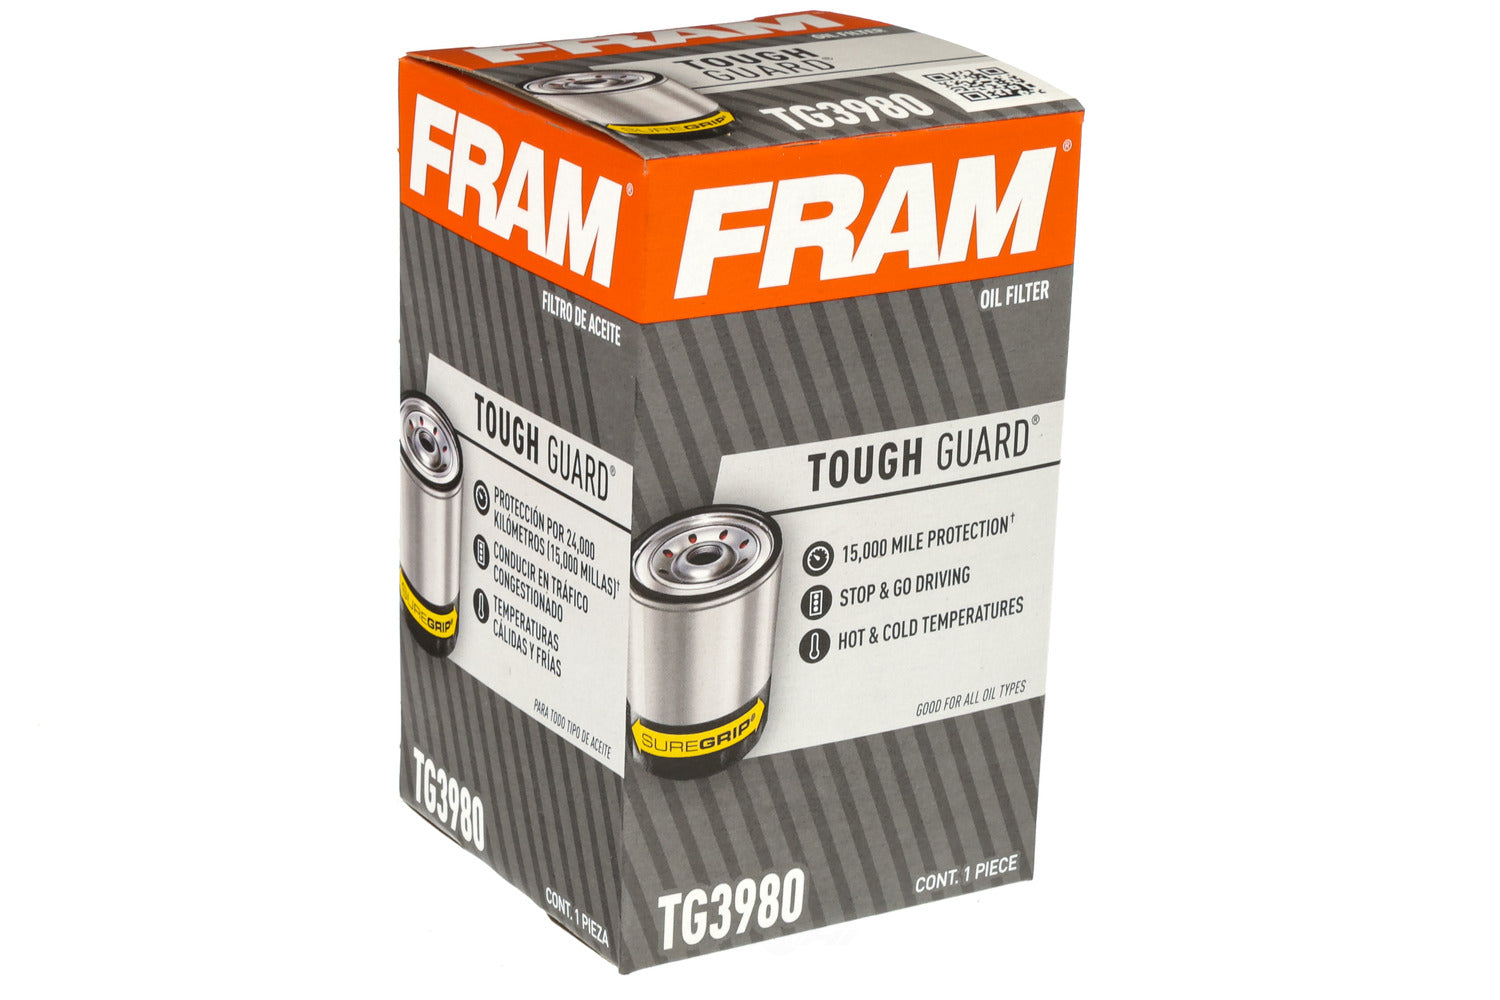 TG3980 FRAM Tough Guard Oil Filter